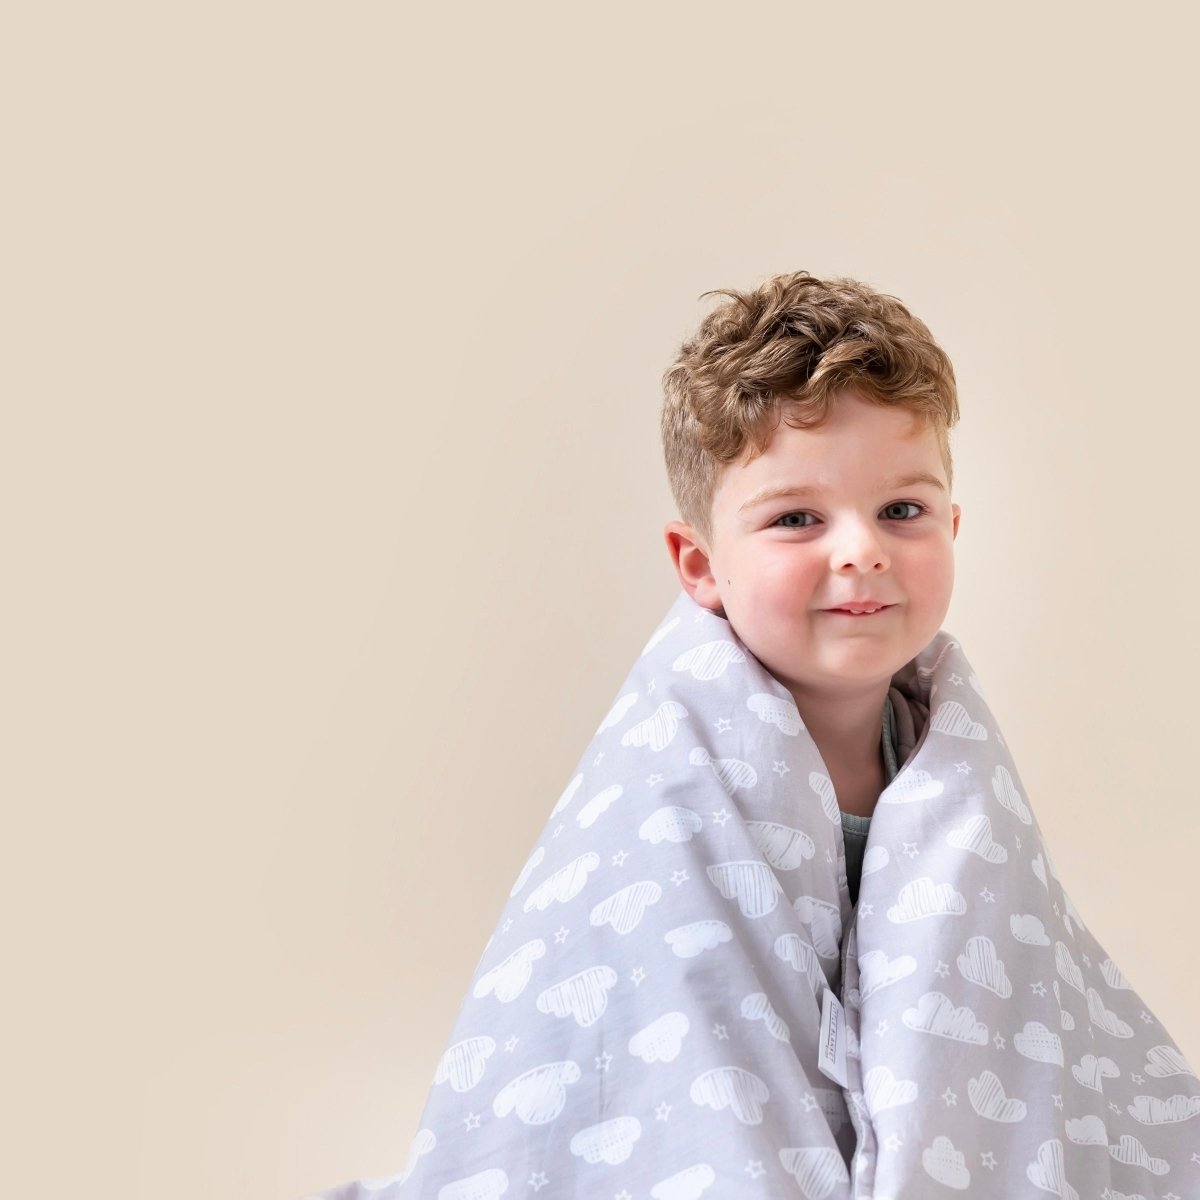 Grey Cloud Children's Weighted Blanket - The Little Blanket Shop